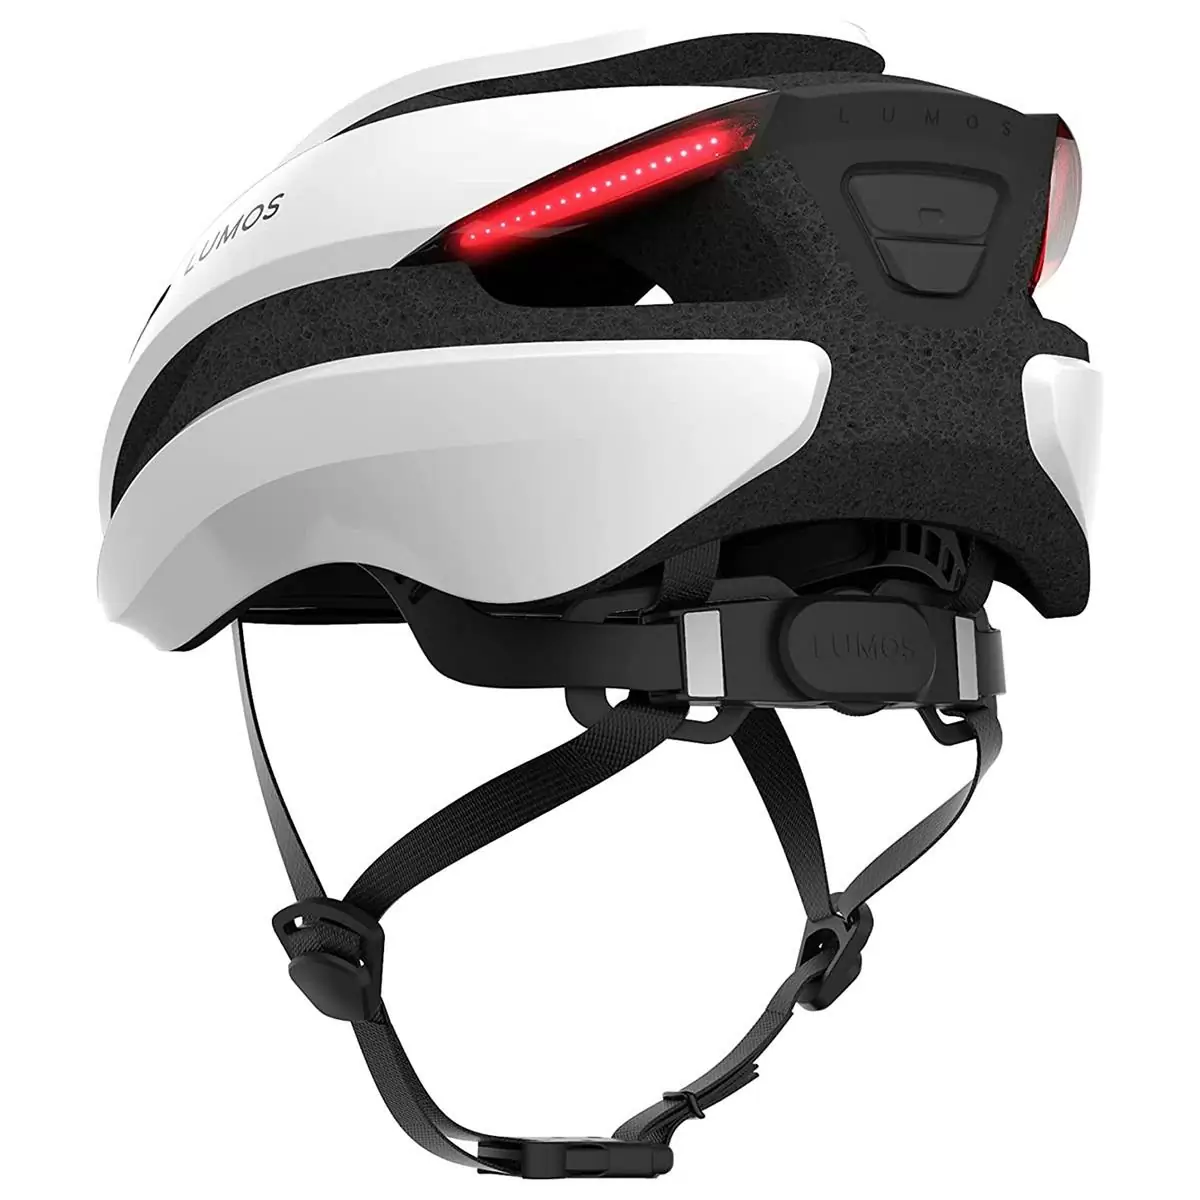 Ultra Helmet White Size M/L (54-61cm) #3